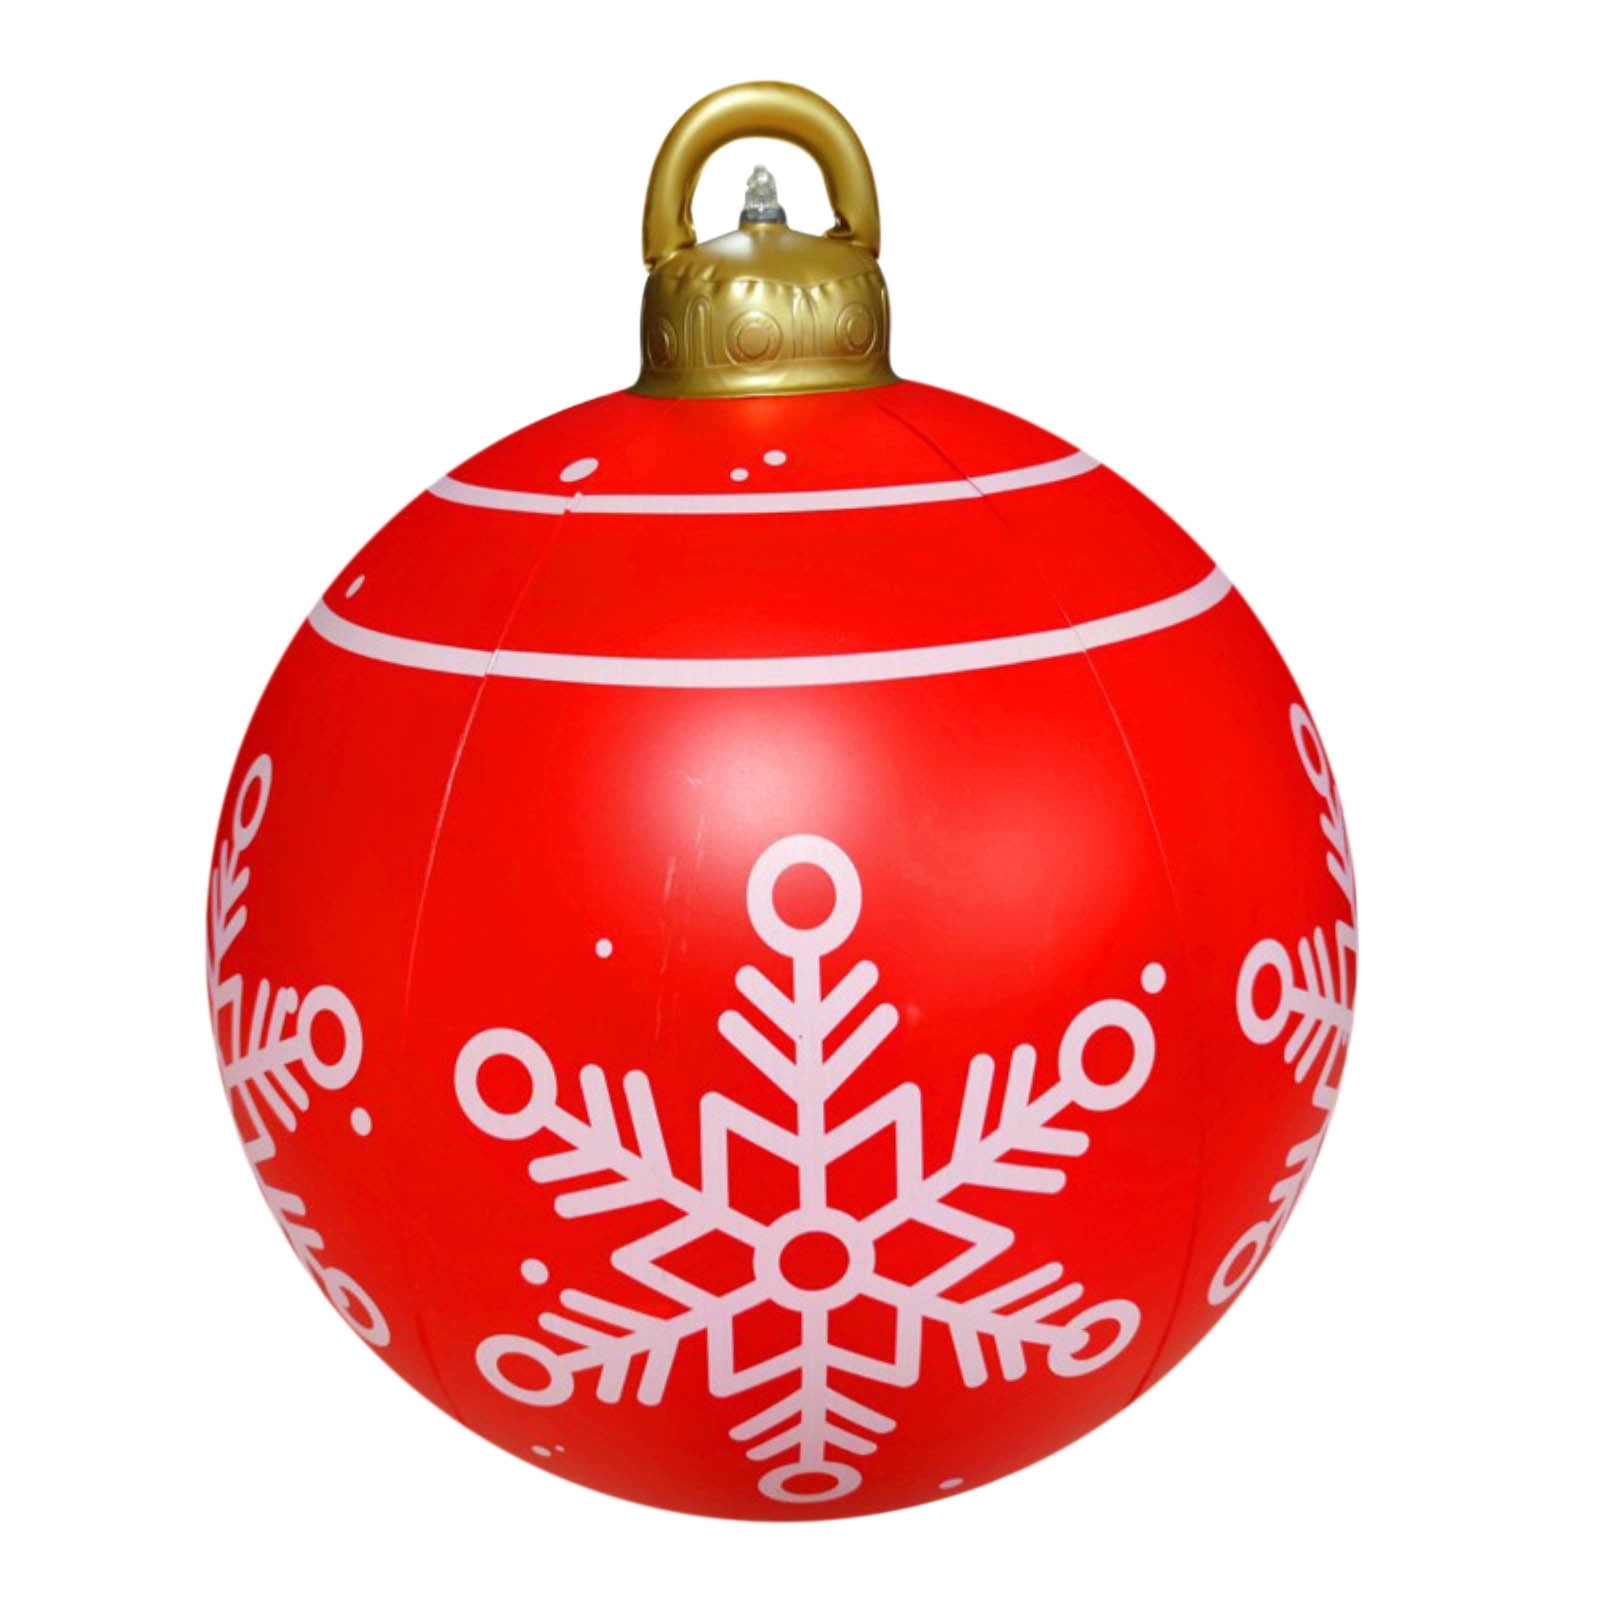 Vikakiooze 60cm Outdoor Christmas Iatable Decorated Ball Giant ...